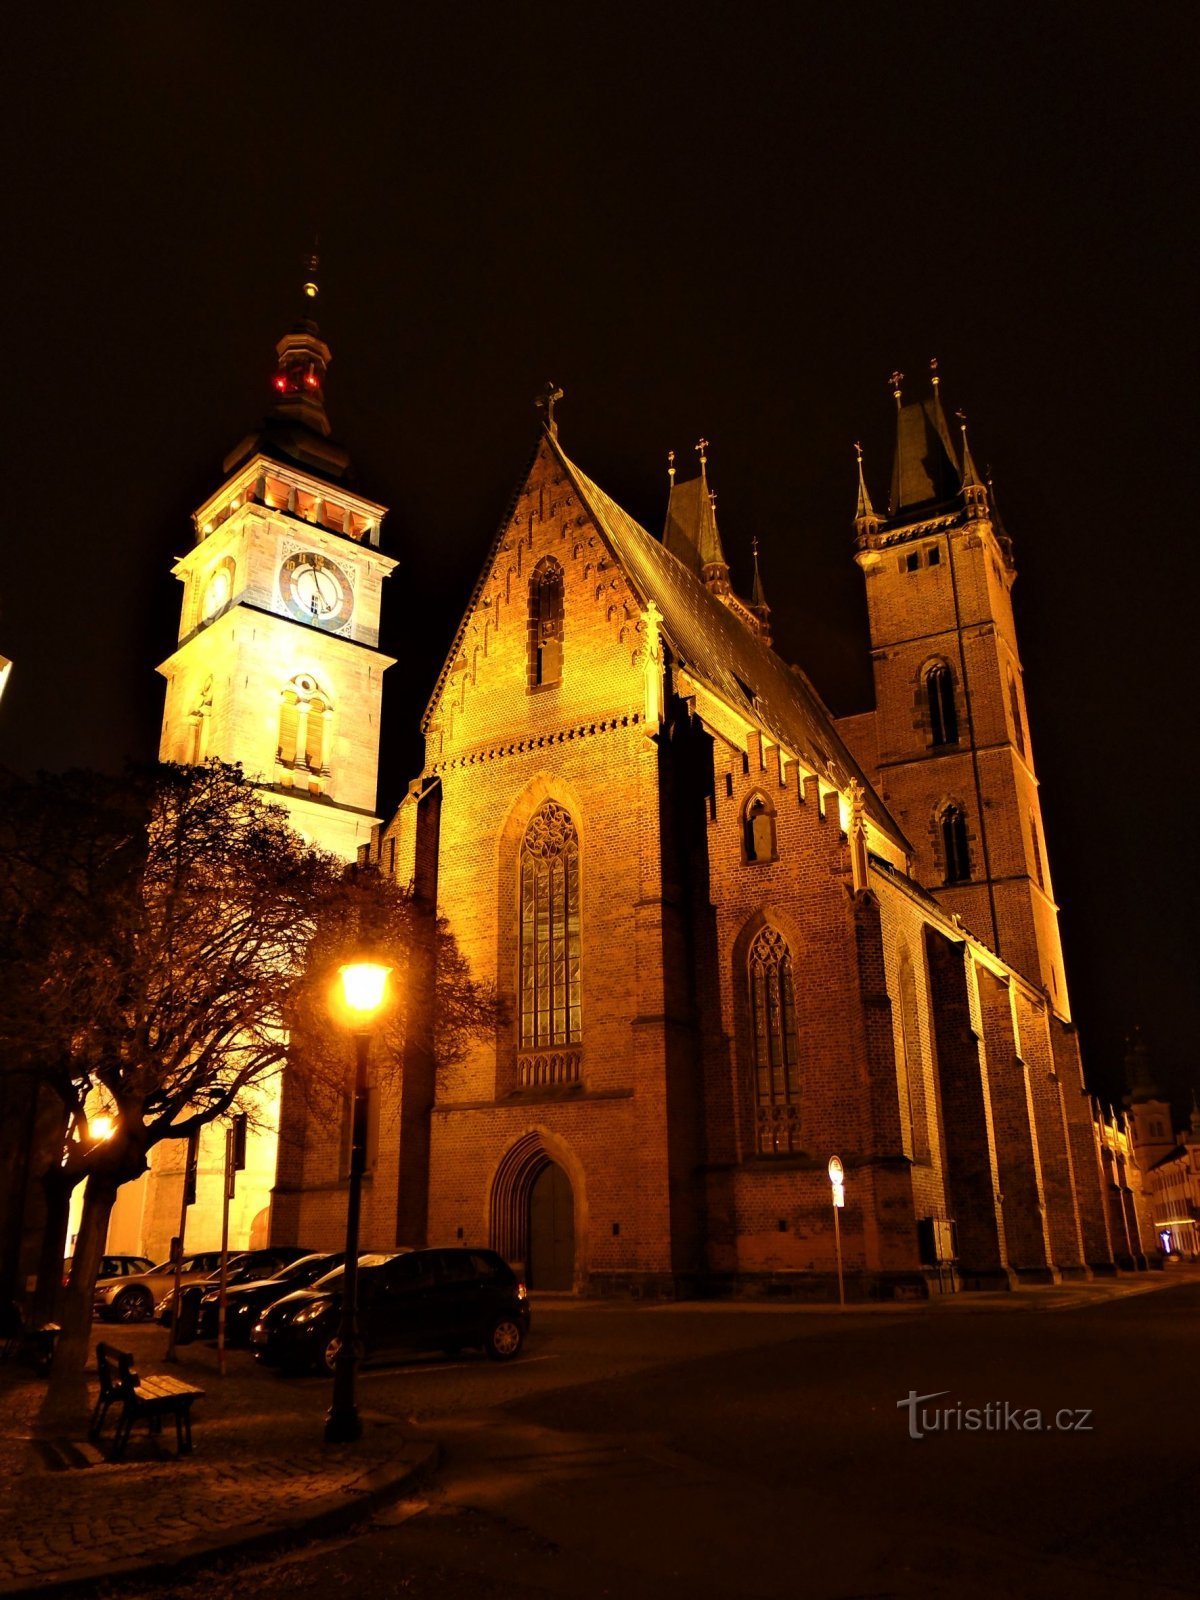 Beli stolp in katedrala sv. Duh (Hradec Králové, 13.12.2020. XNUMX. XNUMX)